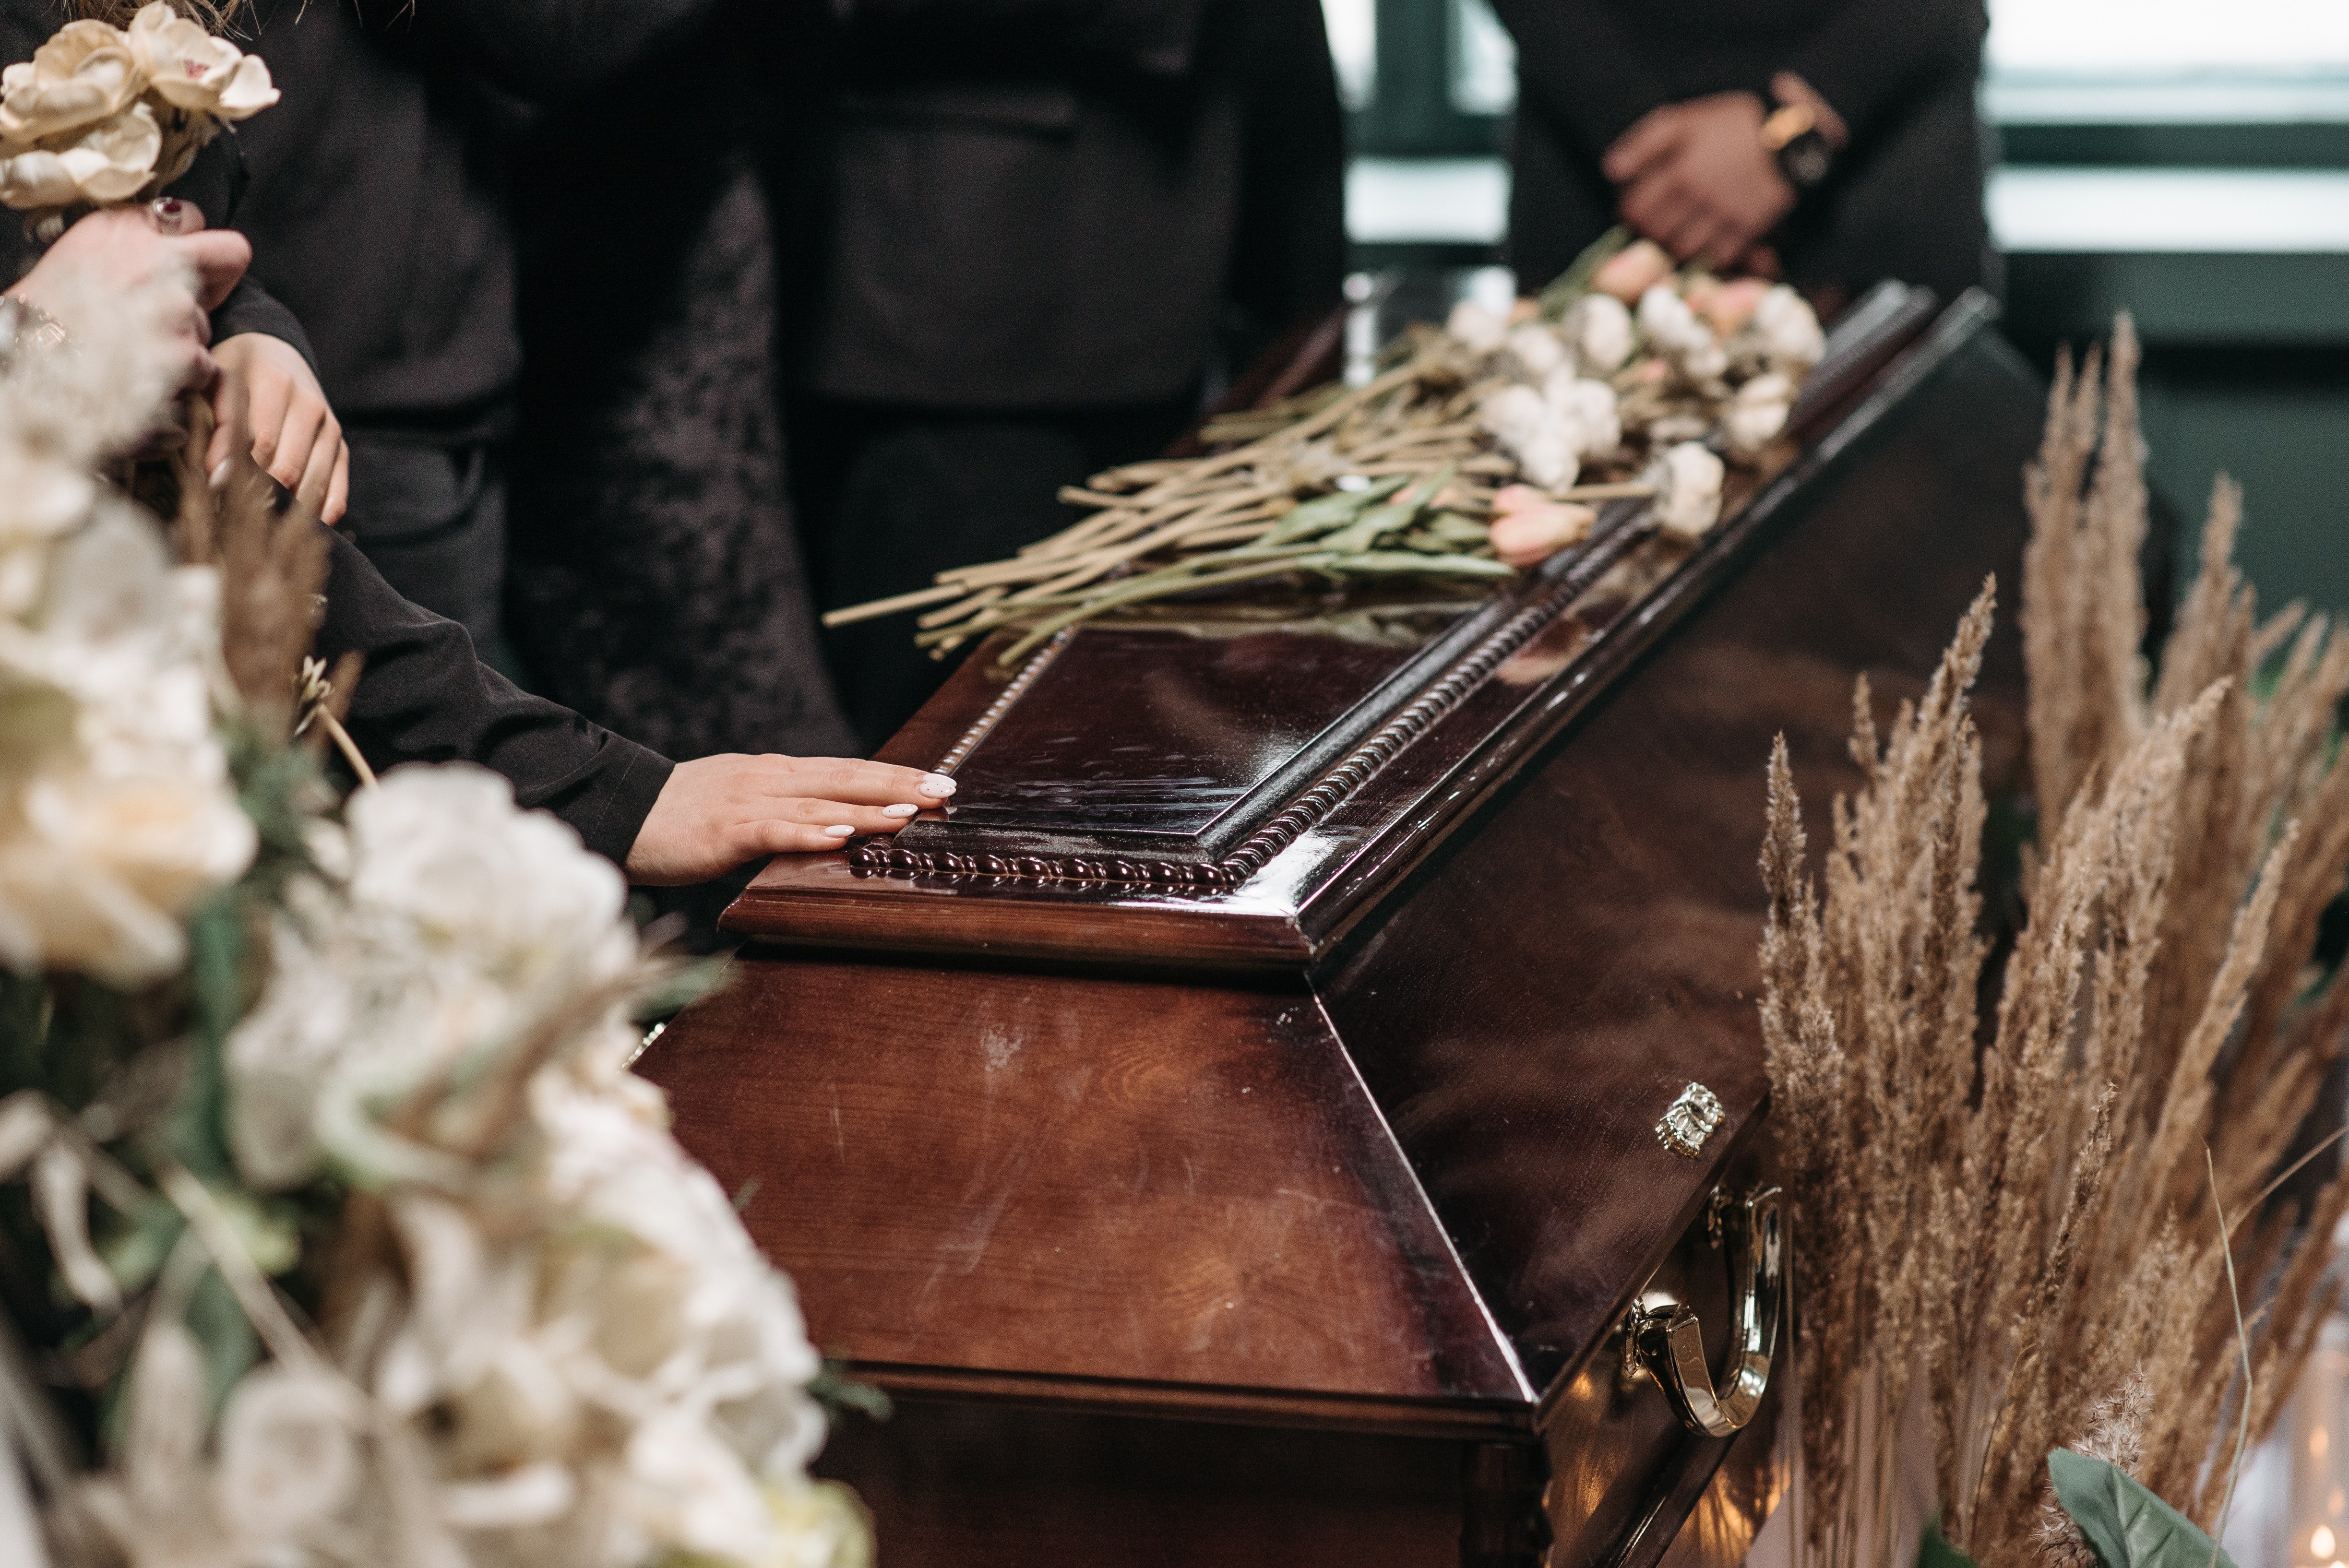 A funeral in progress | Source: Pexels